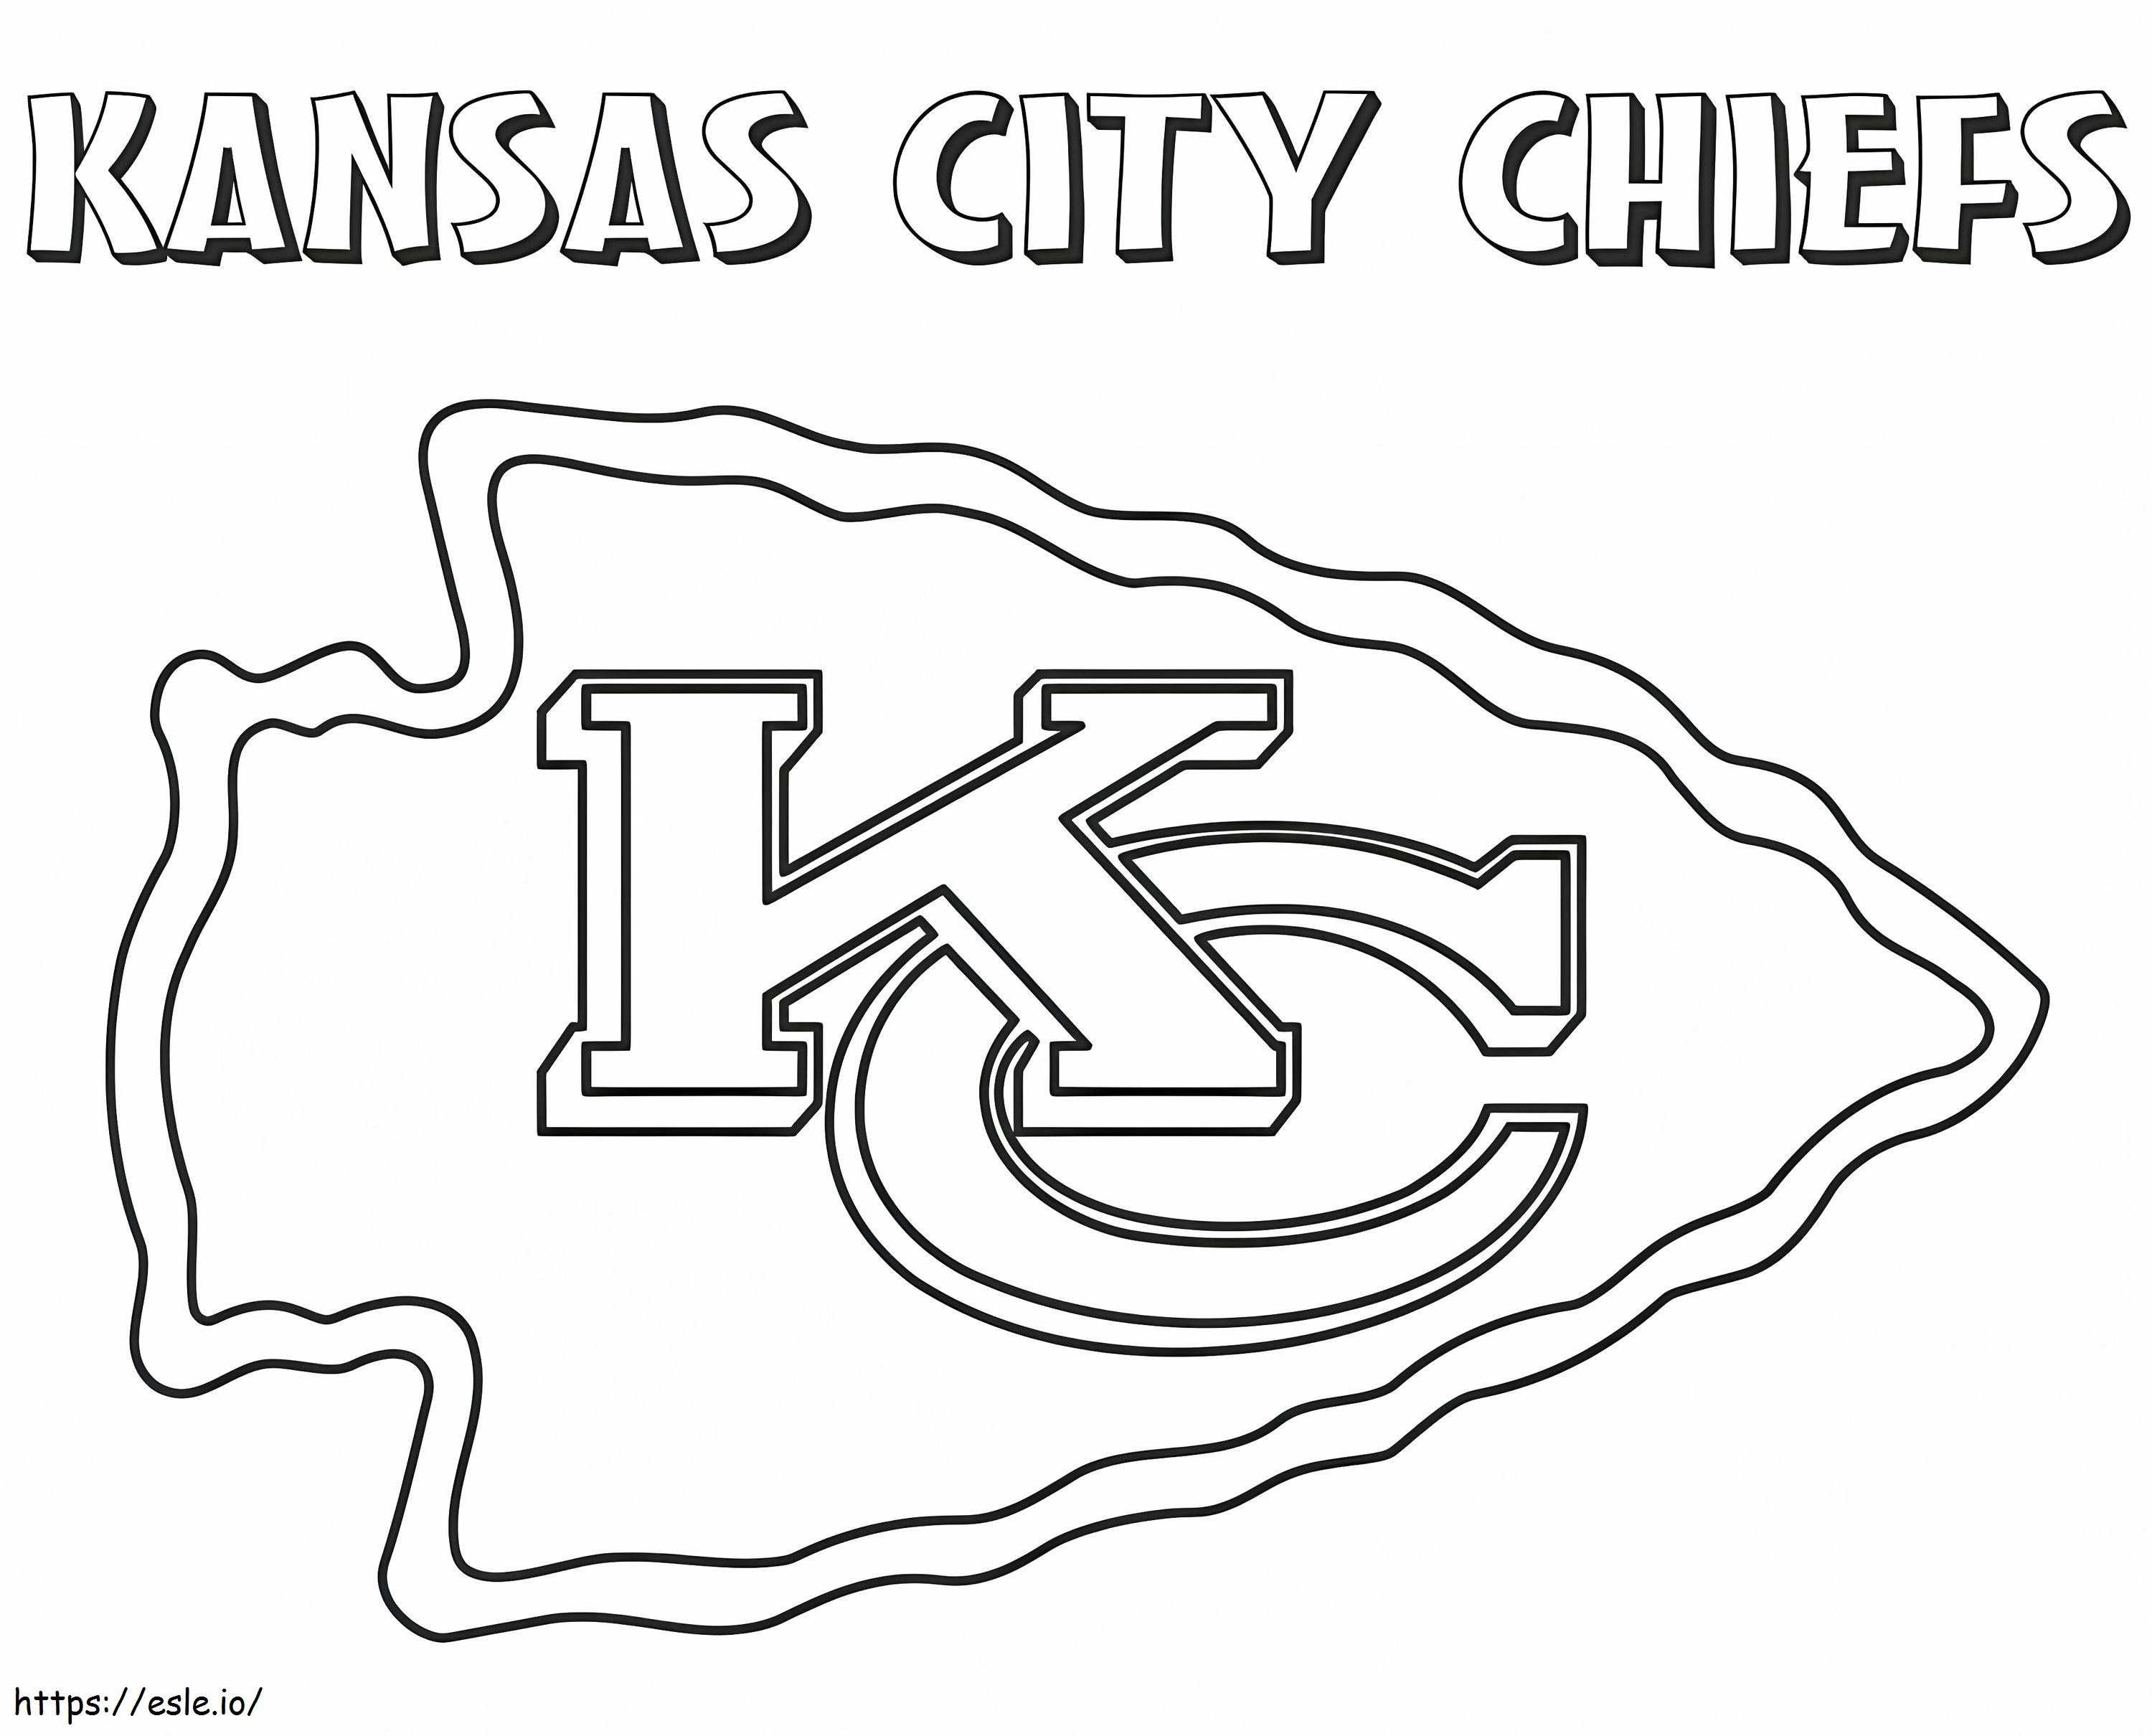 Print Kansas City Chiefs coloring page